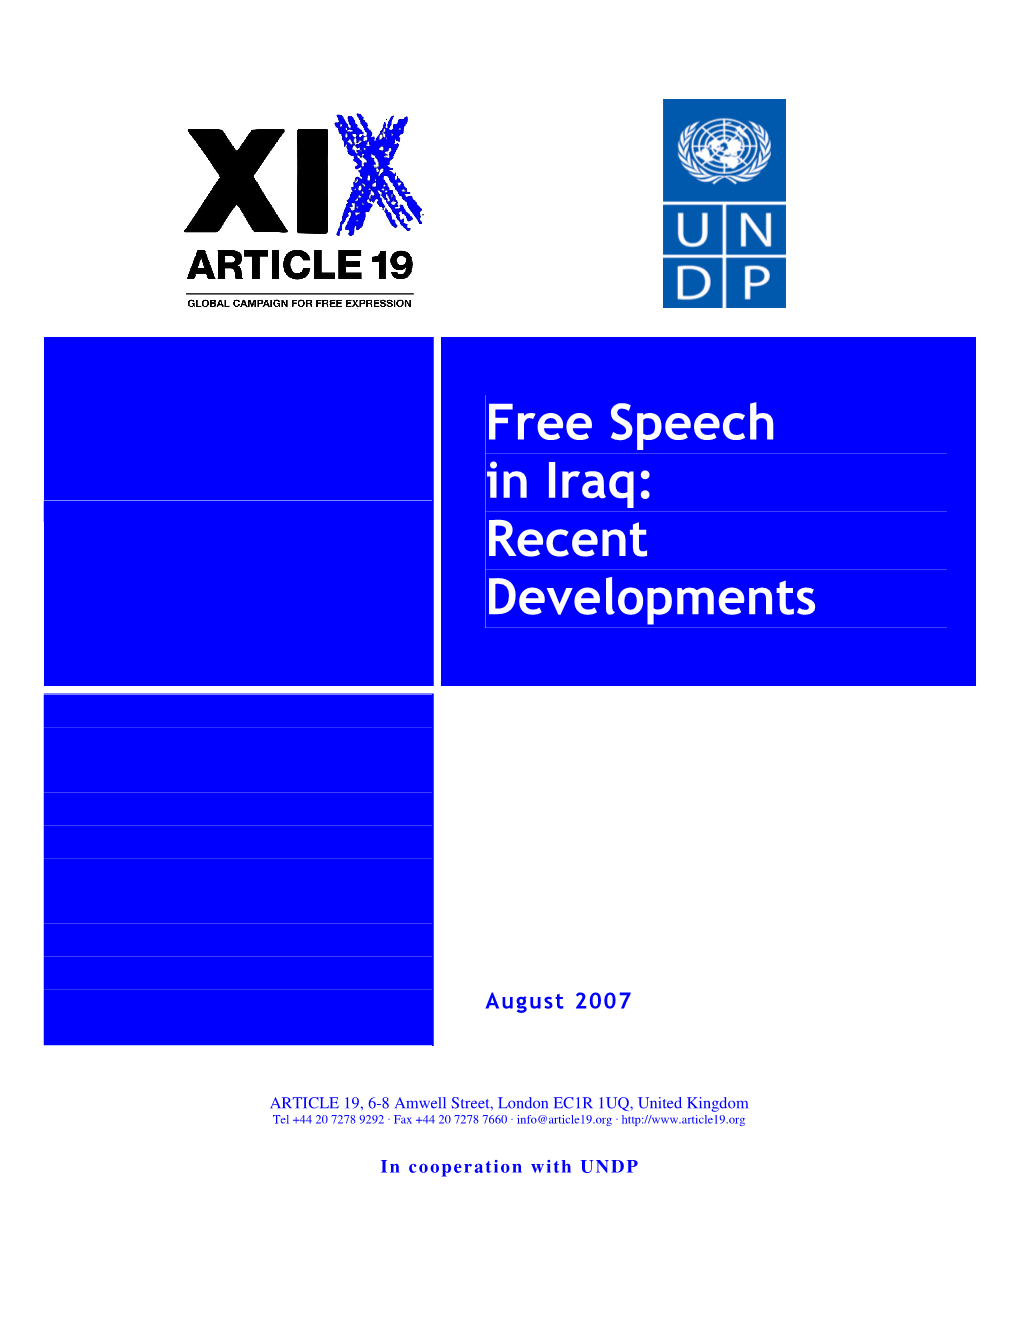 Free Speech in Iraq: Recent Developments